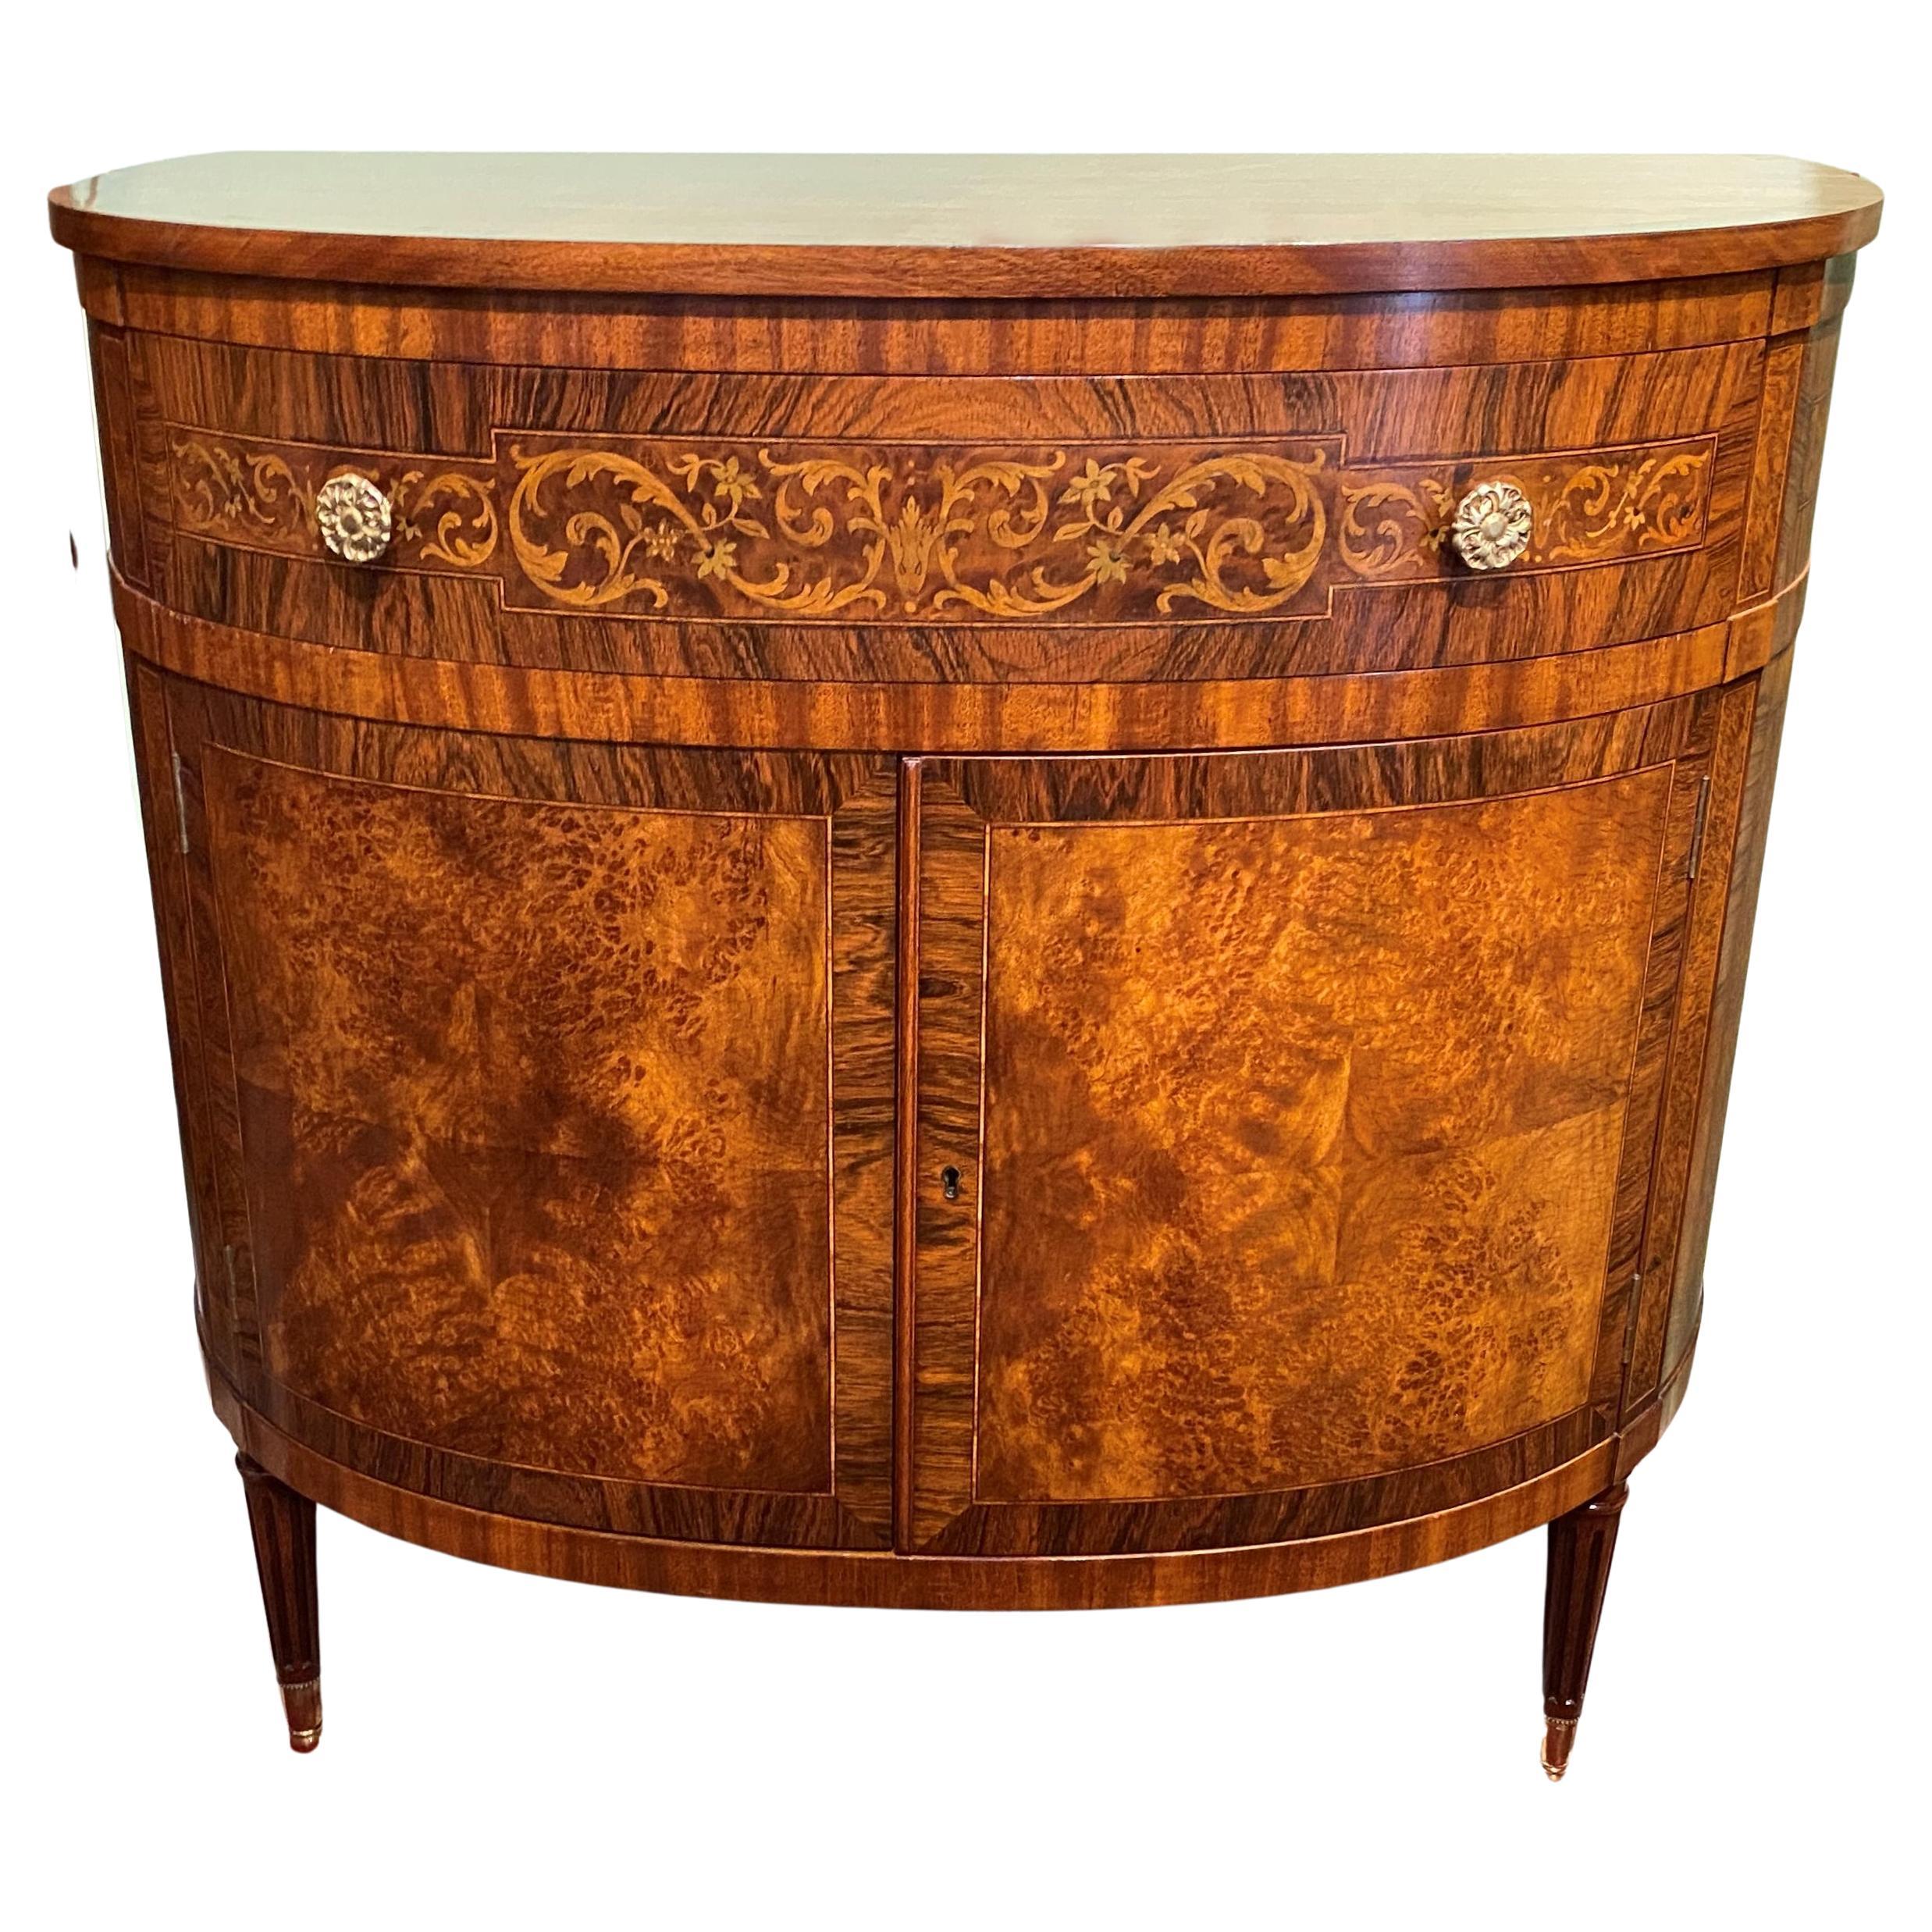 Joseph Gerte Mahogany Inlaid Demi Lune Cabinet with Burl and Rosewood Veneers